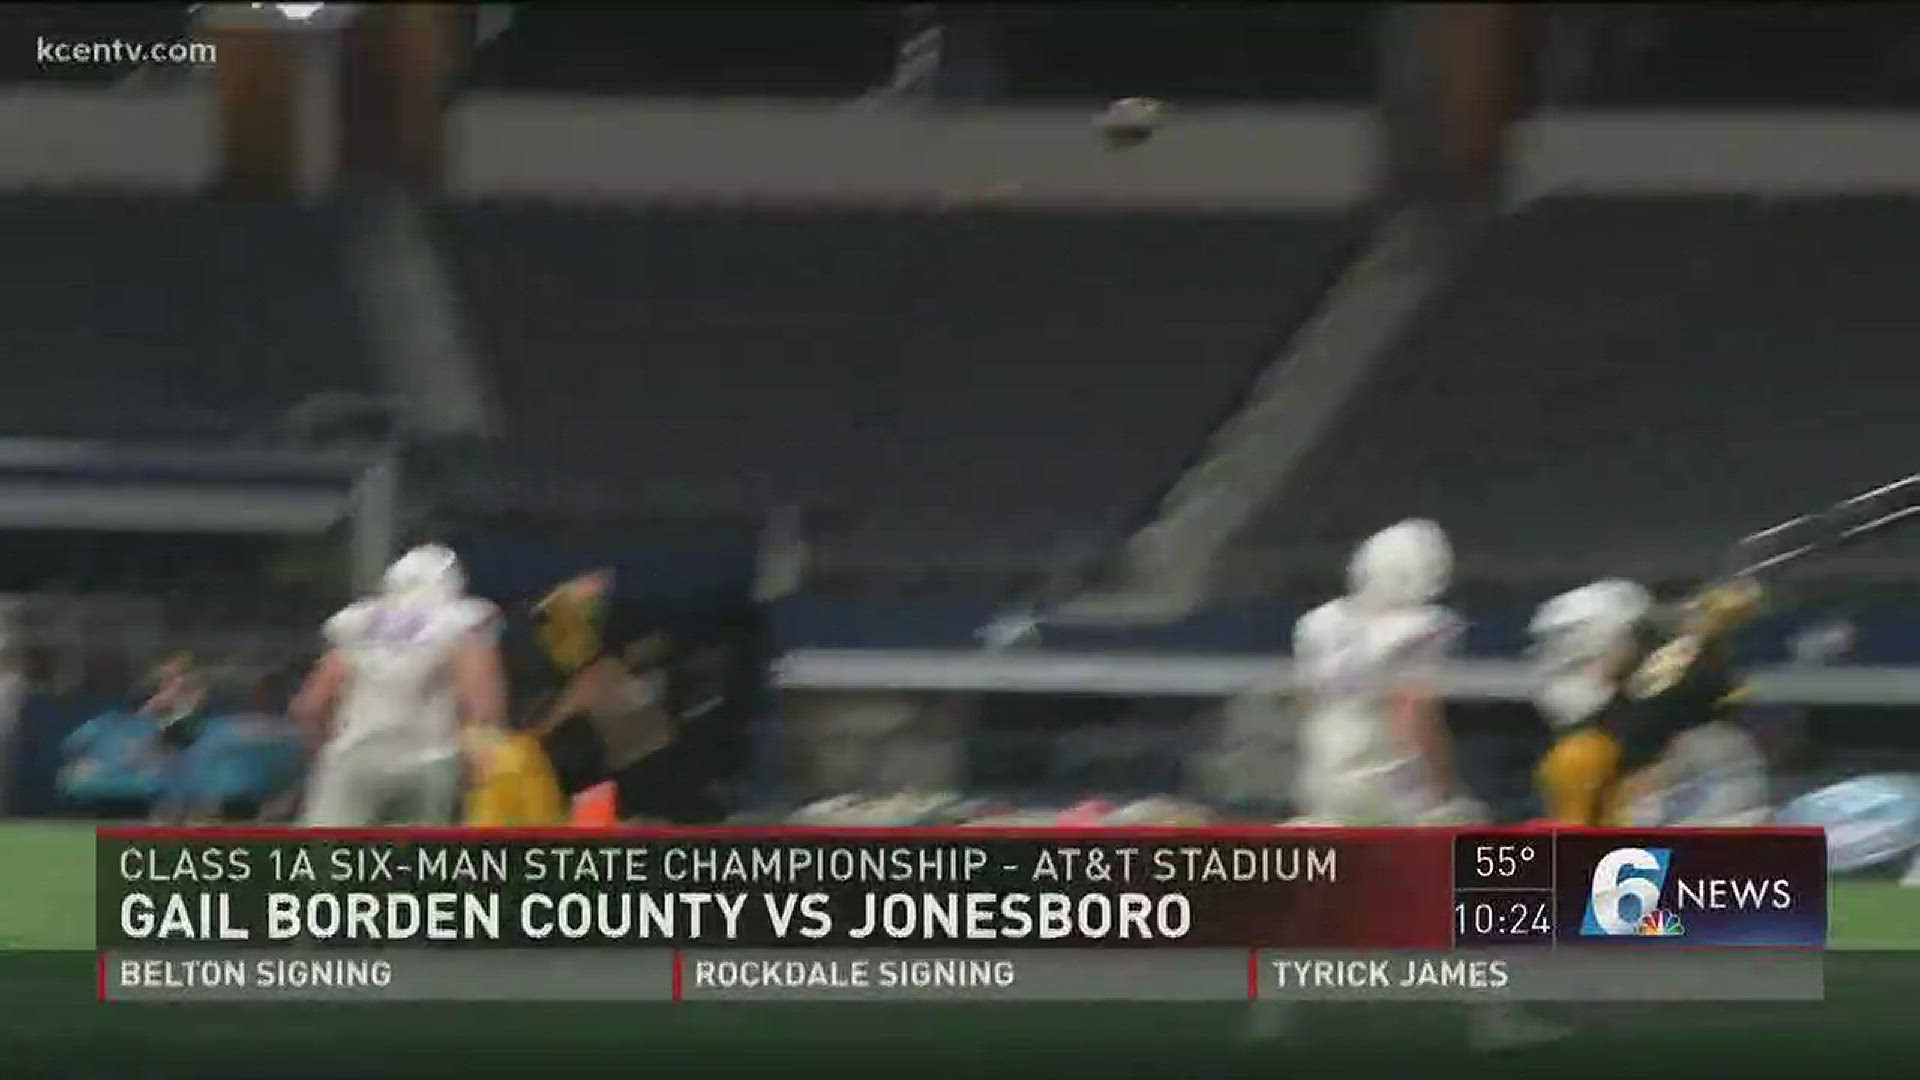 Jonesboro loses to Gail Borden County in 1A six-man state championship